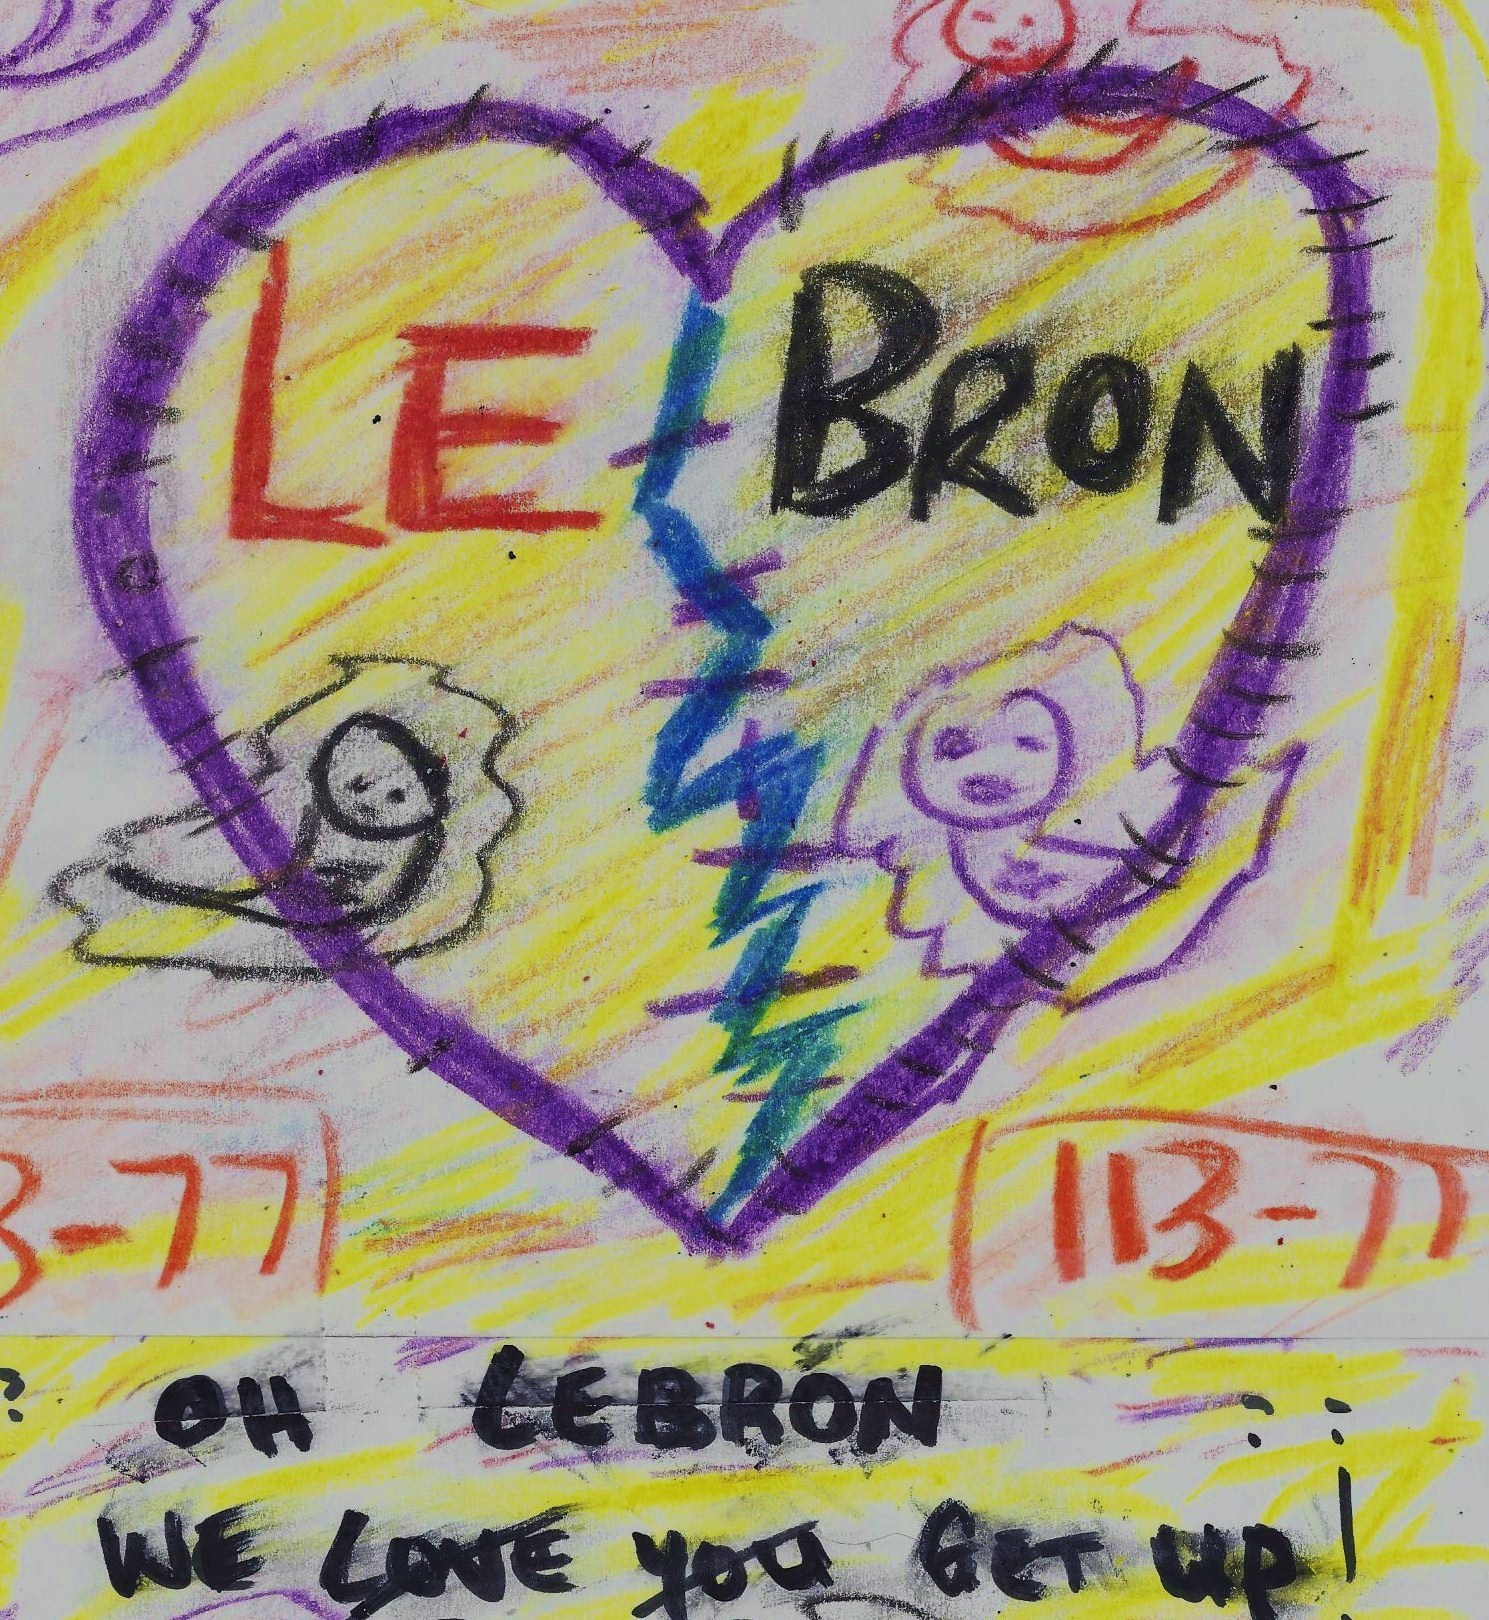 LeBron